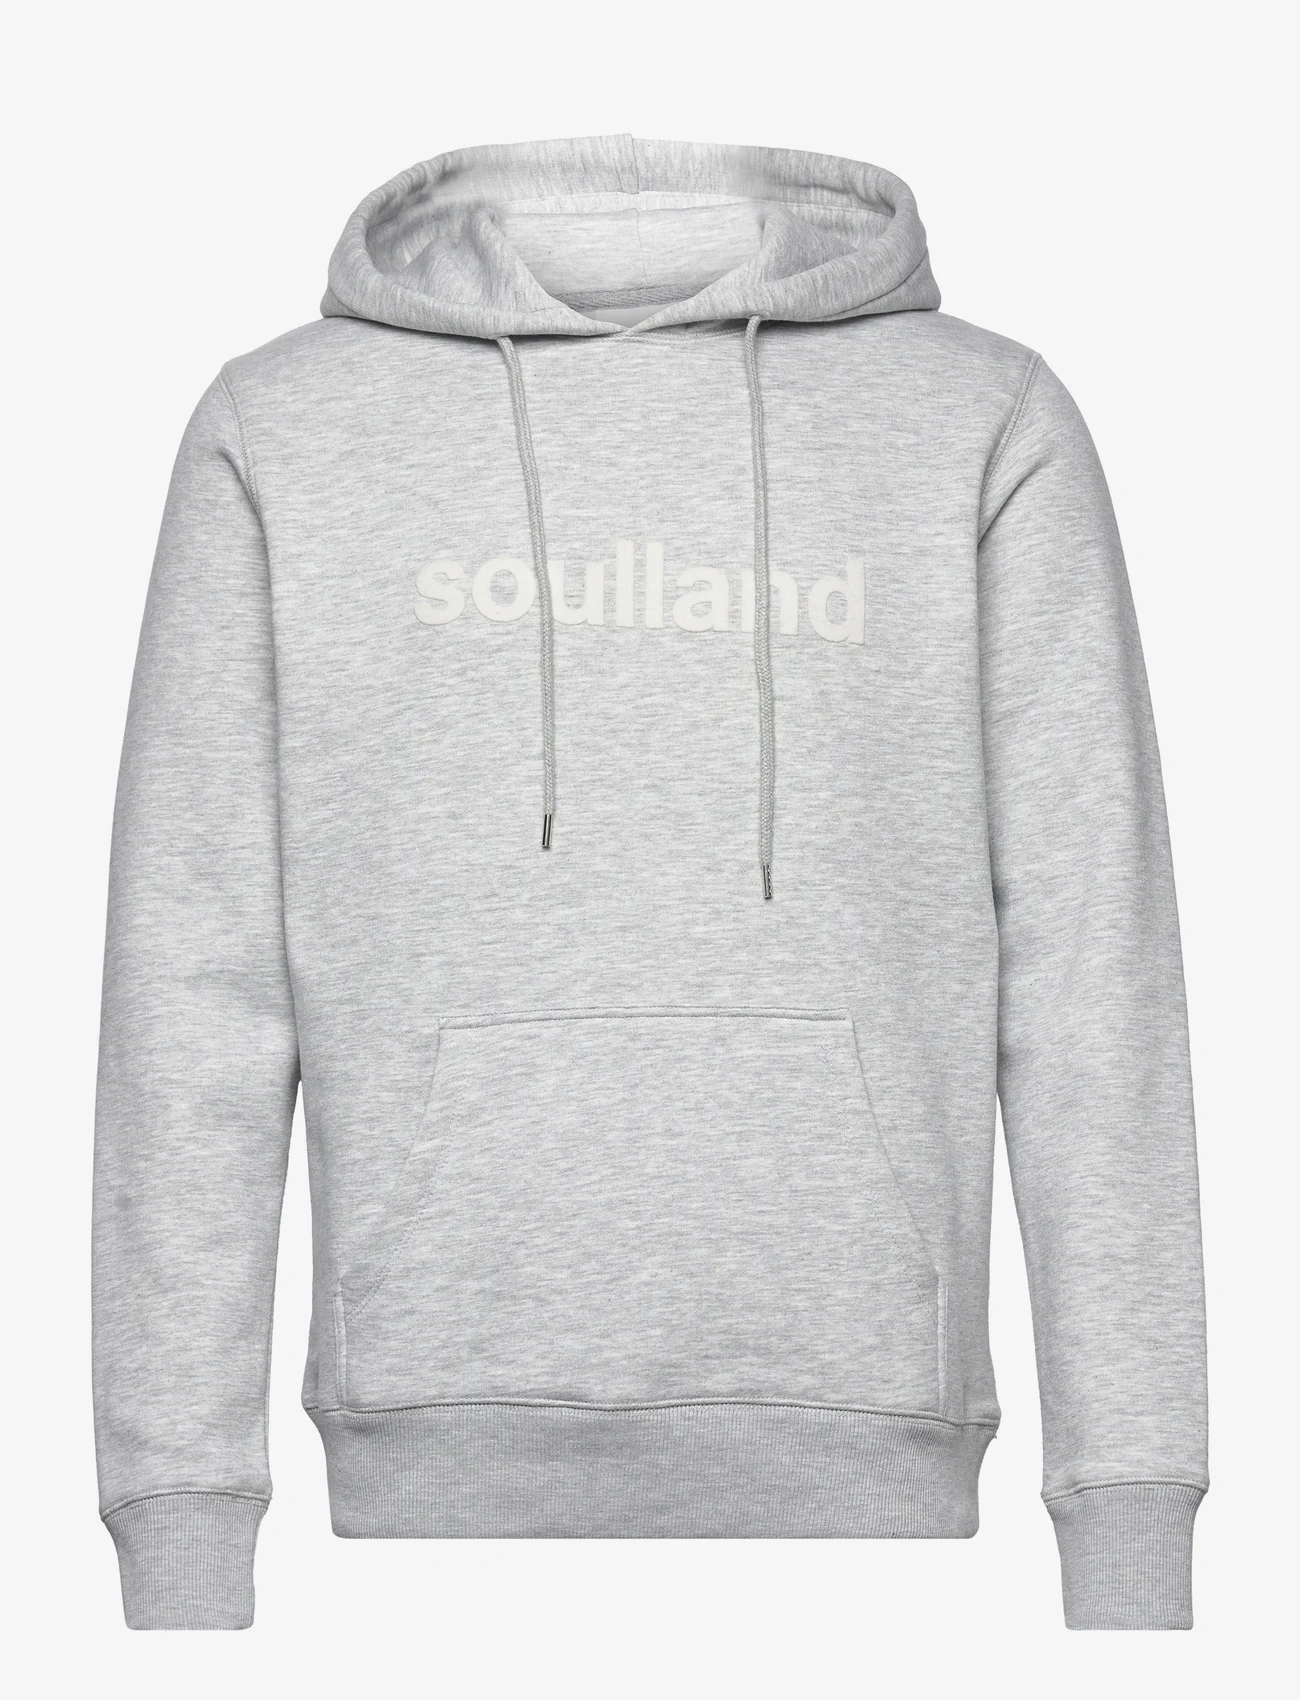 Soulland - Googie hoodie - hettegensere - grey melange - 0